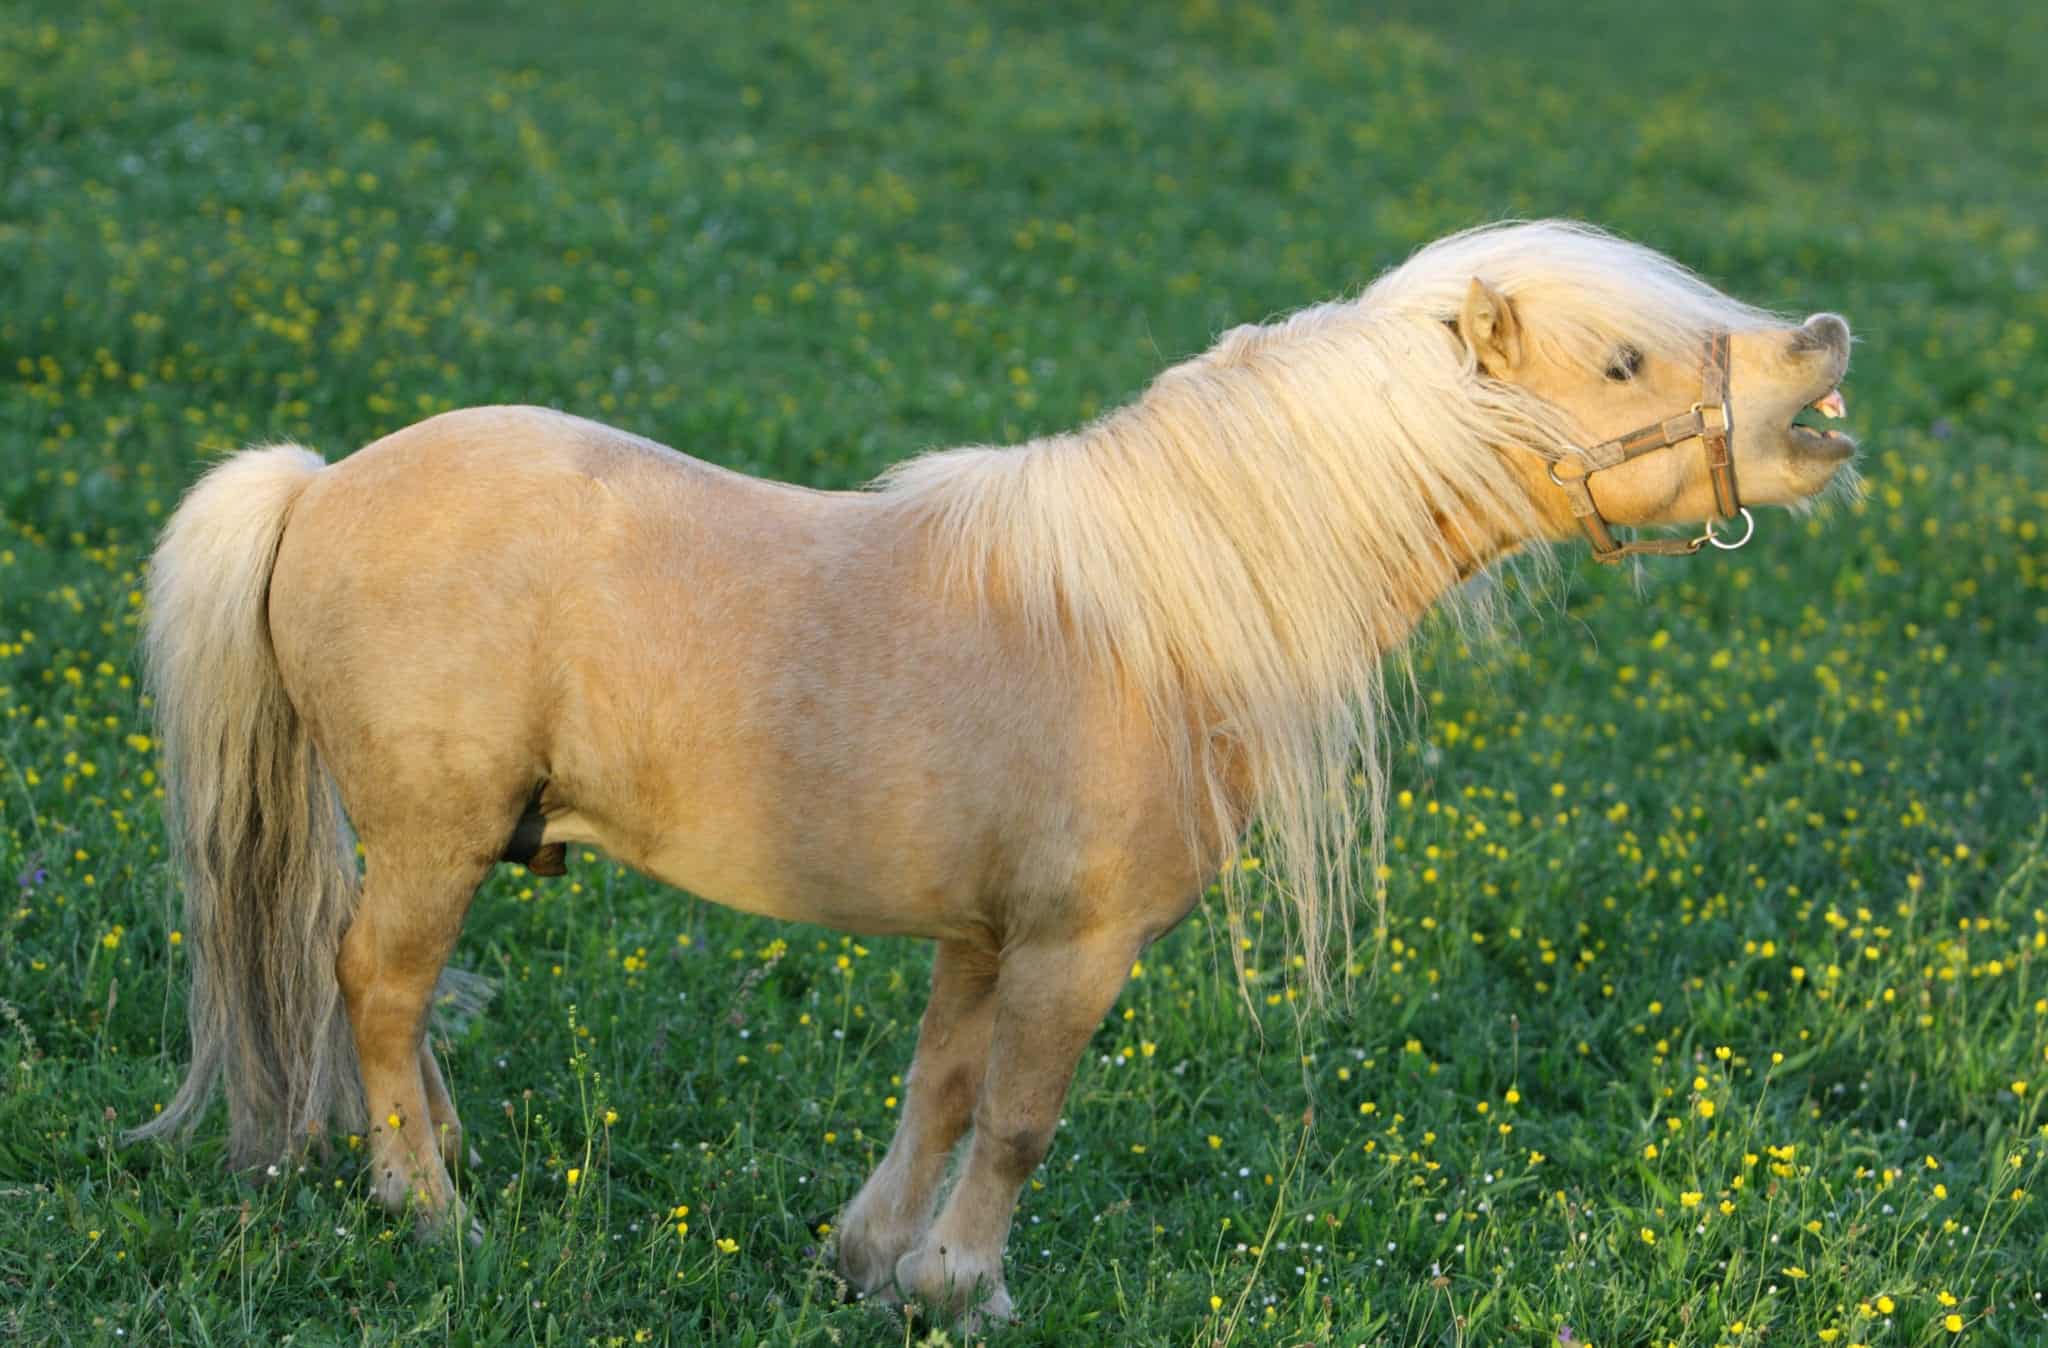 Neighing falabella stallion.